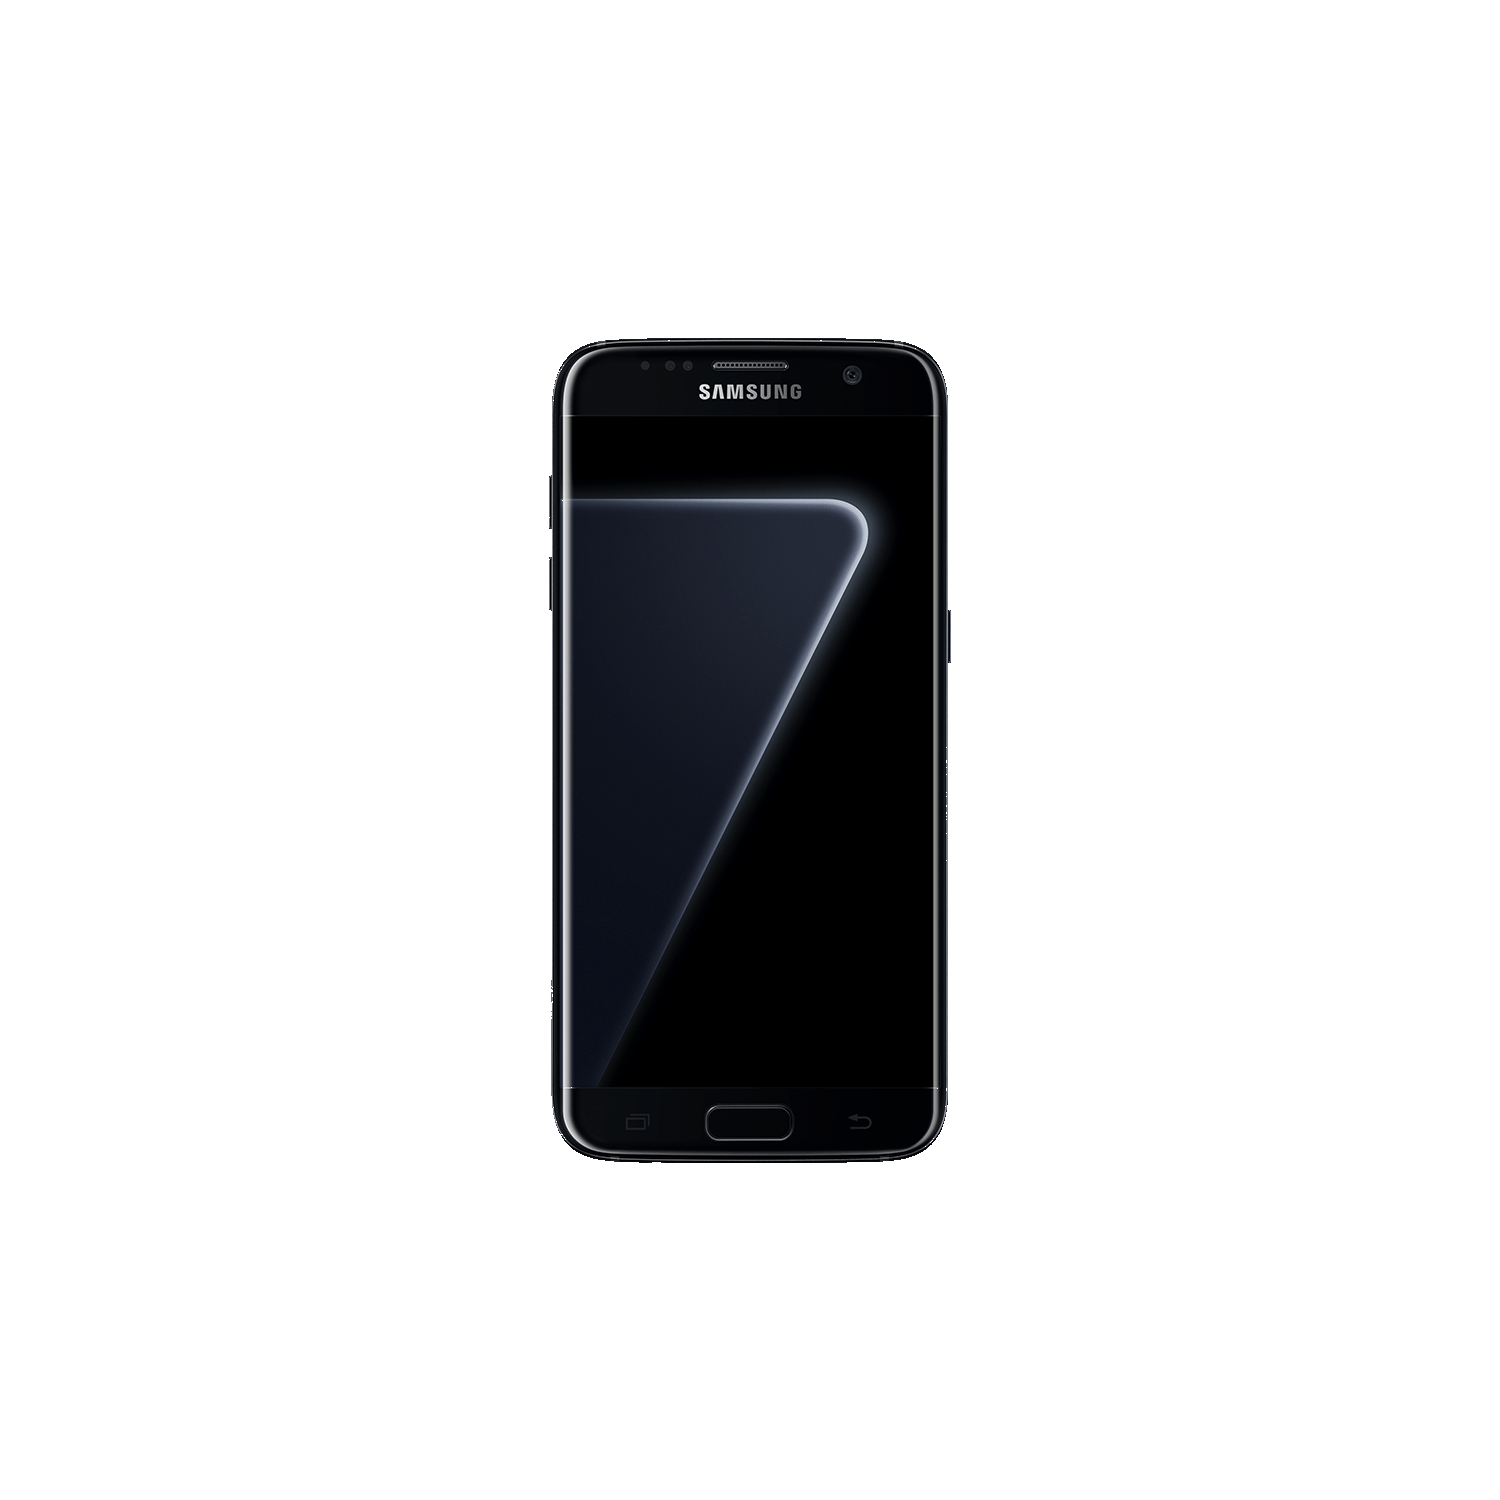 Refurbished (Excellent) - Samsung Galaxy S7 edge 32GB Smartphone - Black Pearl - Unlocked - Certified Refurbished